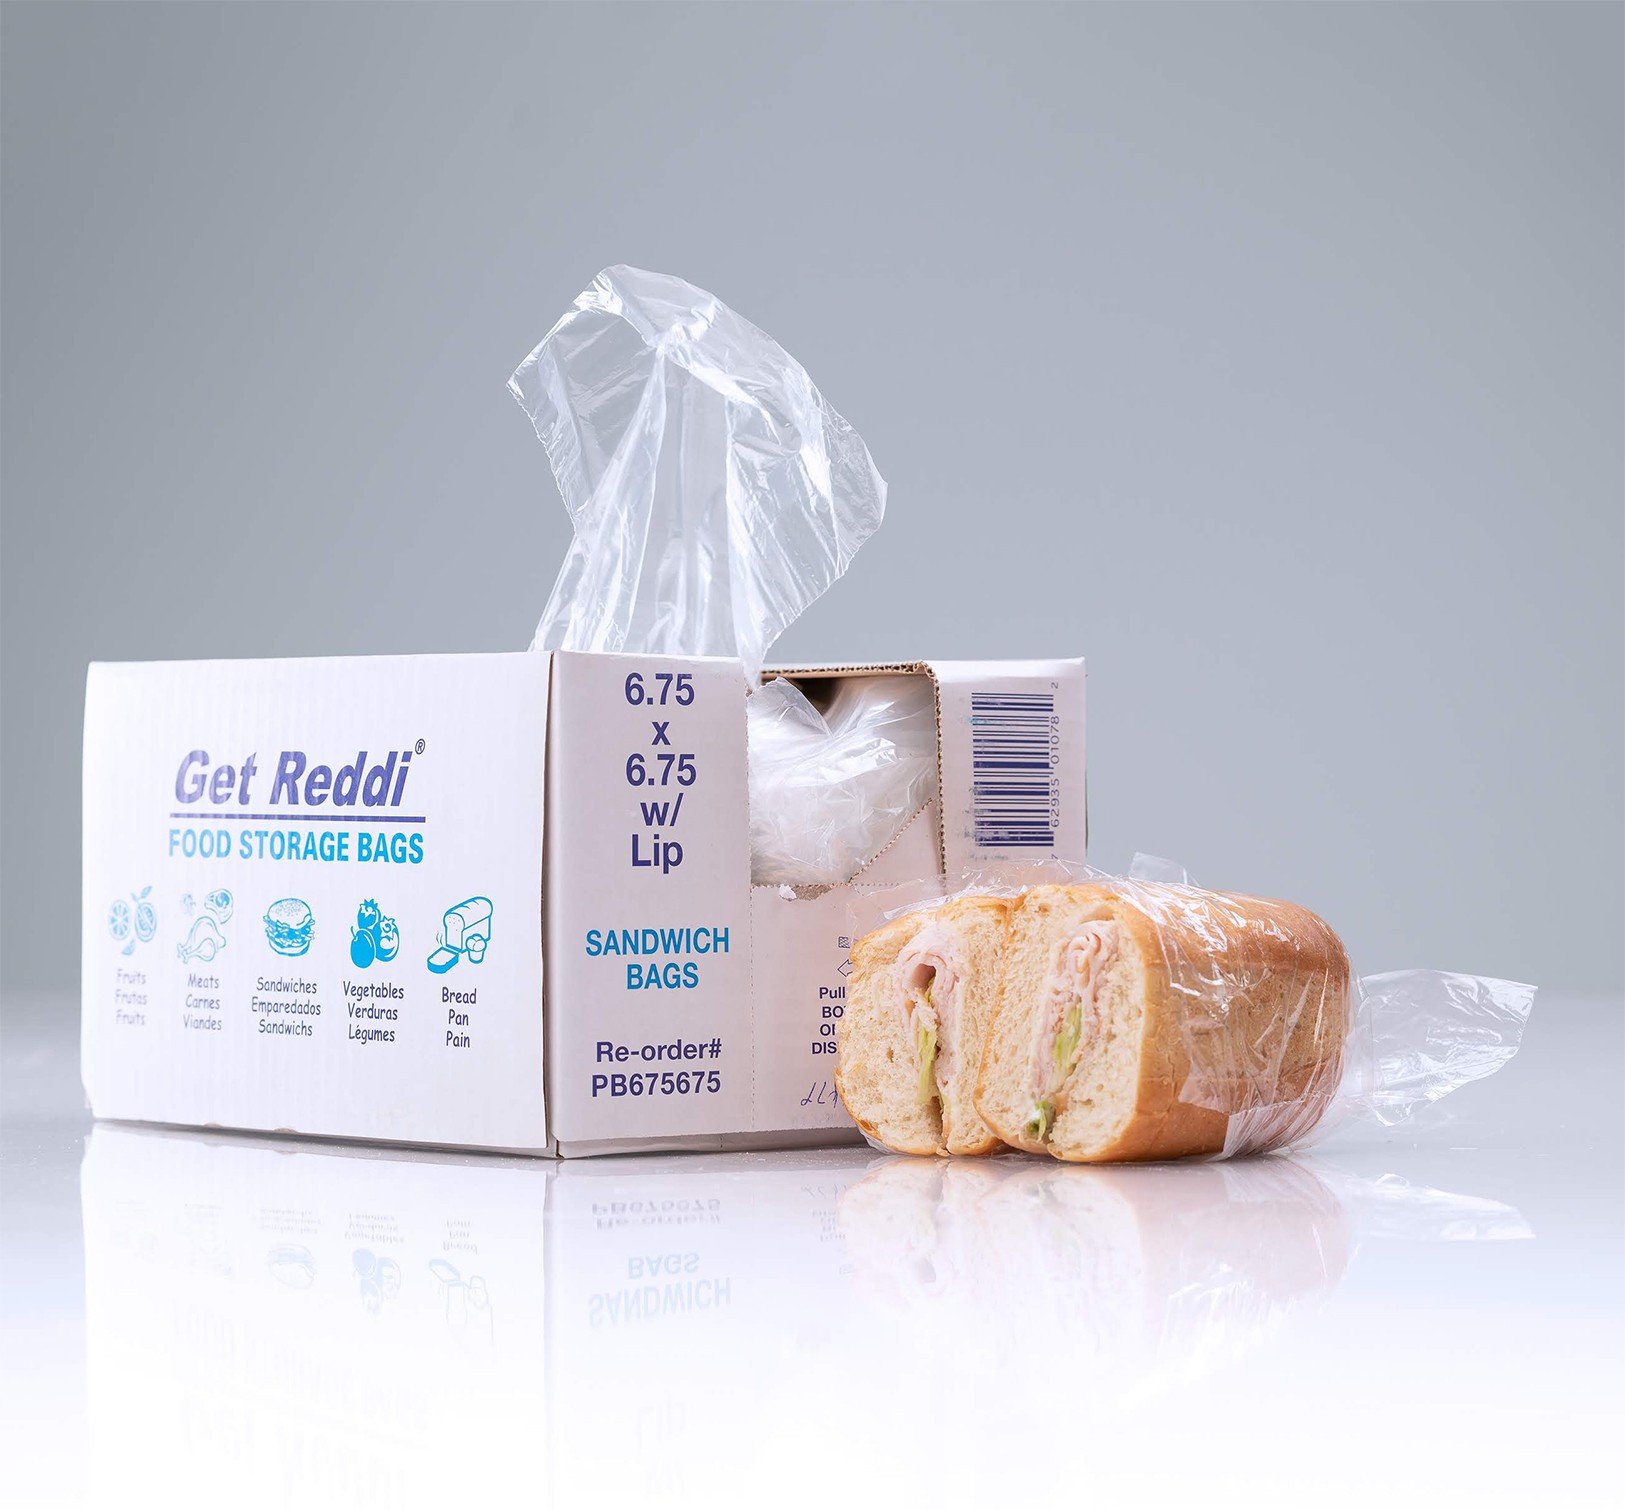 Porte gobelet cellulose 2 compartiments - SML Food Plastic